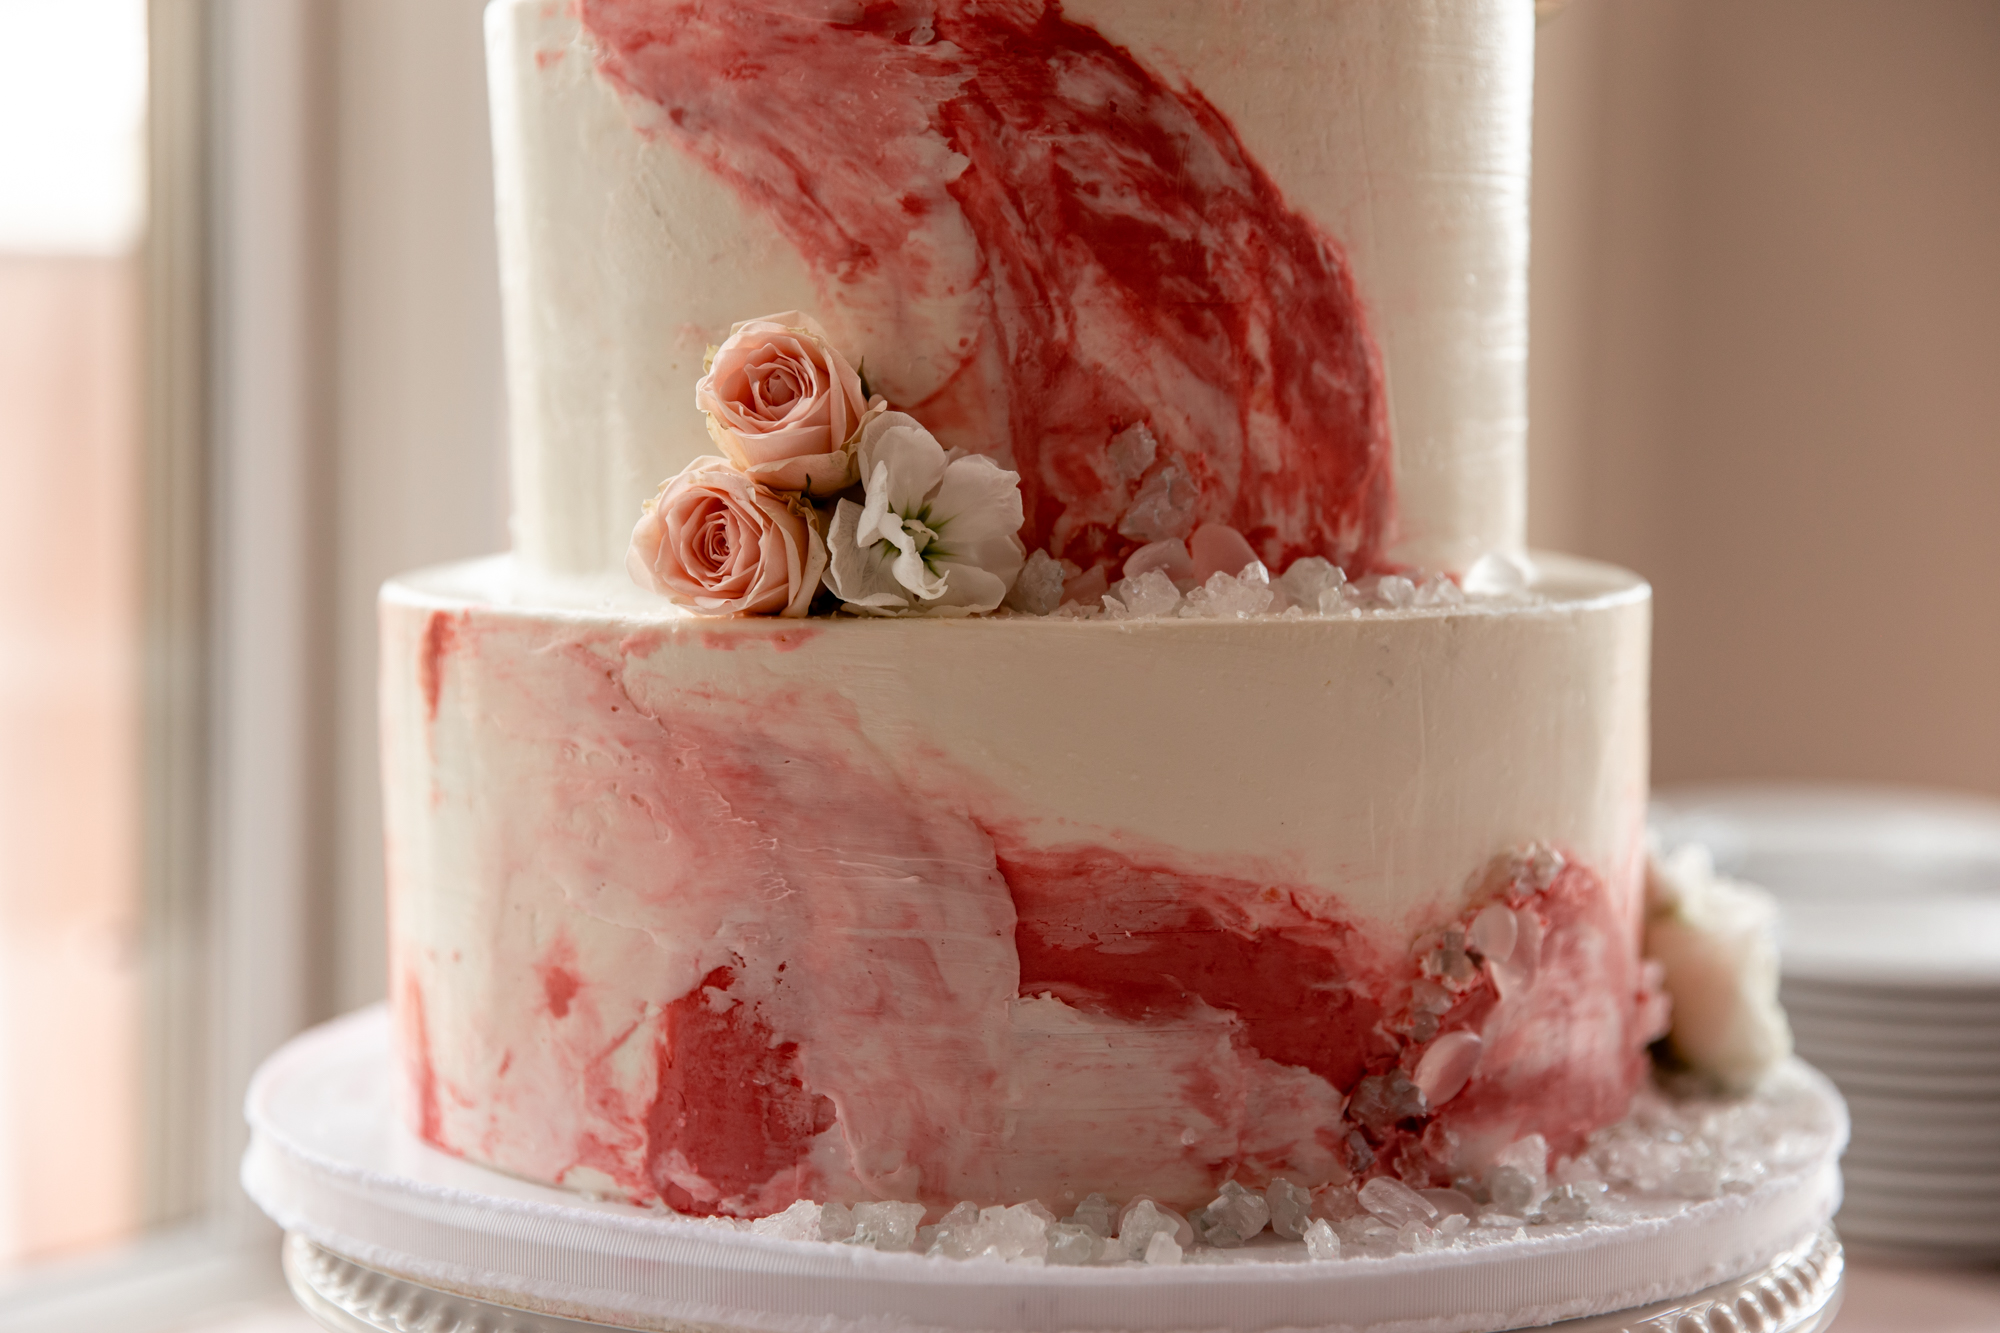 crushed sea glass on a wedding cake